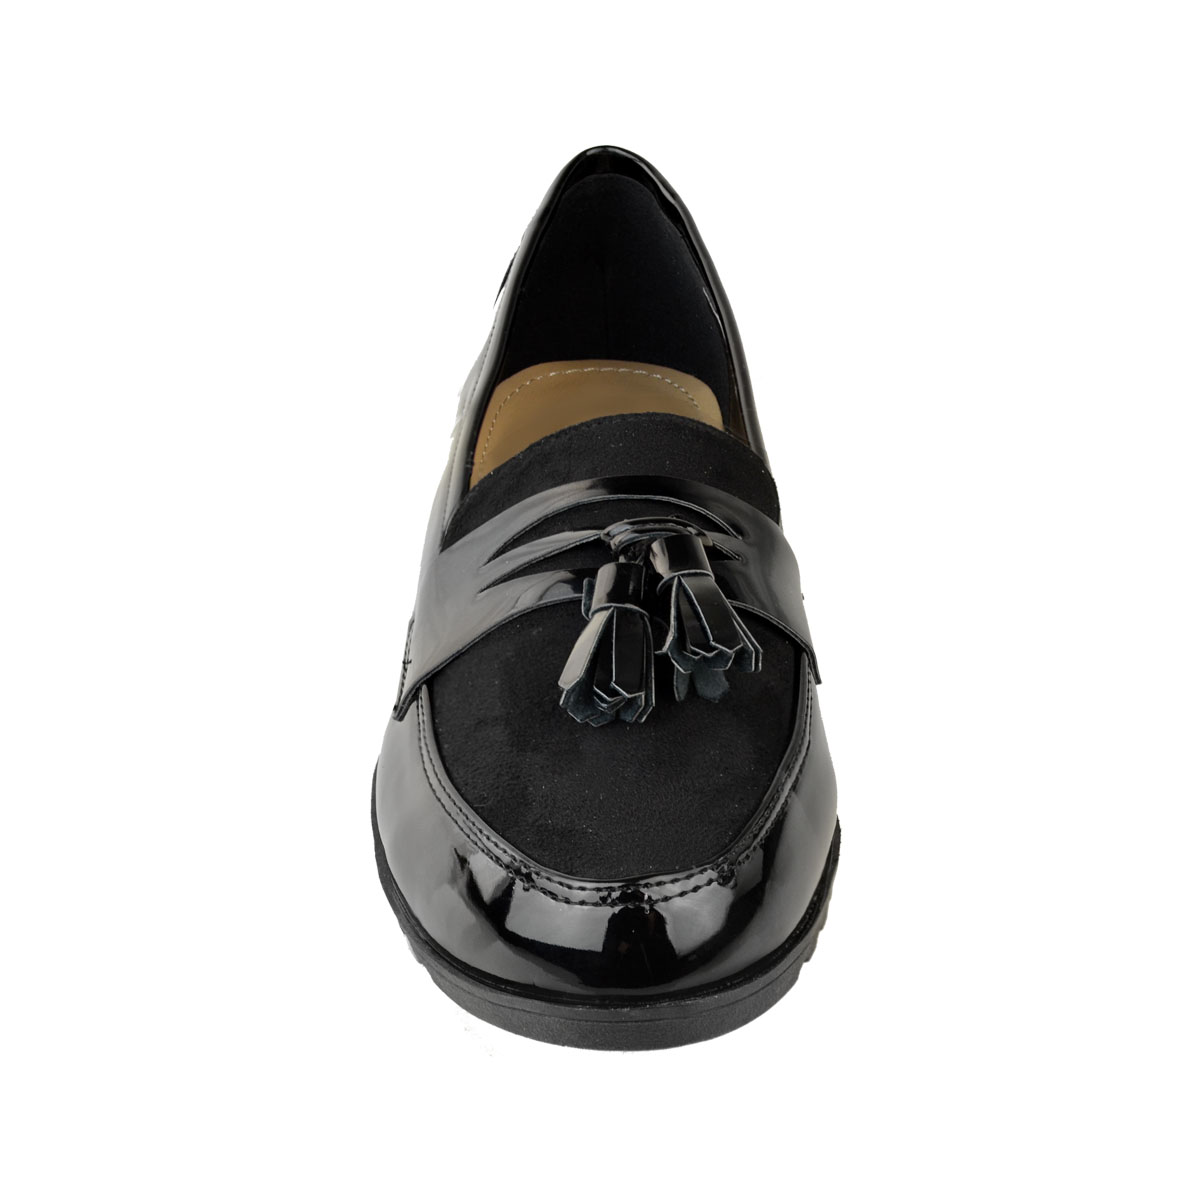 Spot On F90008 Ladies/Older Girls Black School/Work/Casual Loafer Shoes 